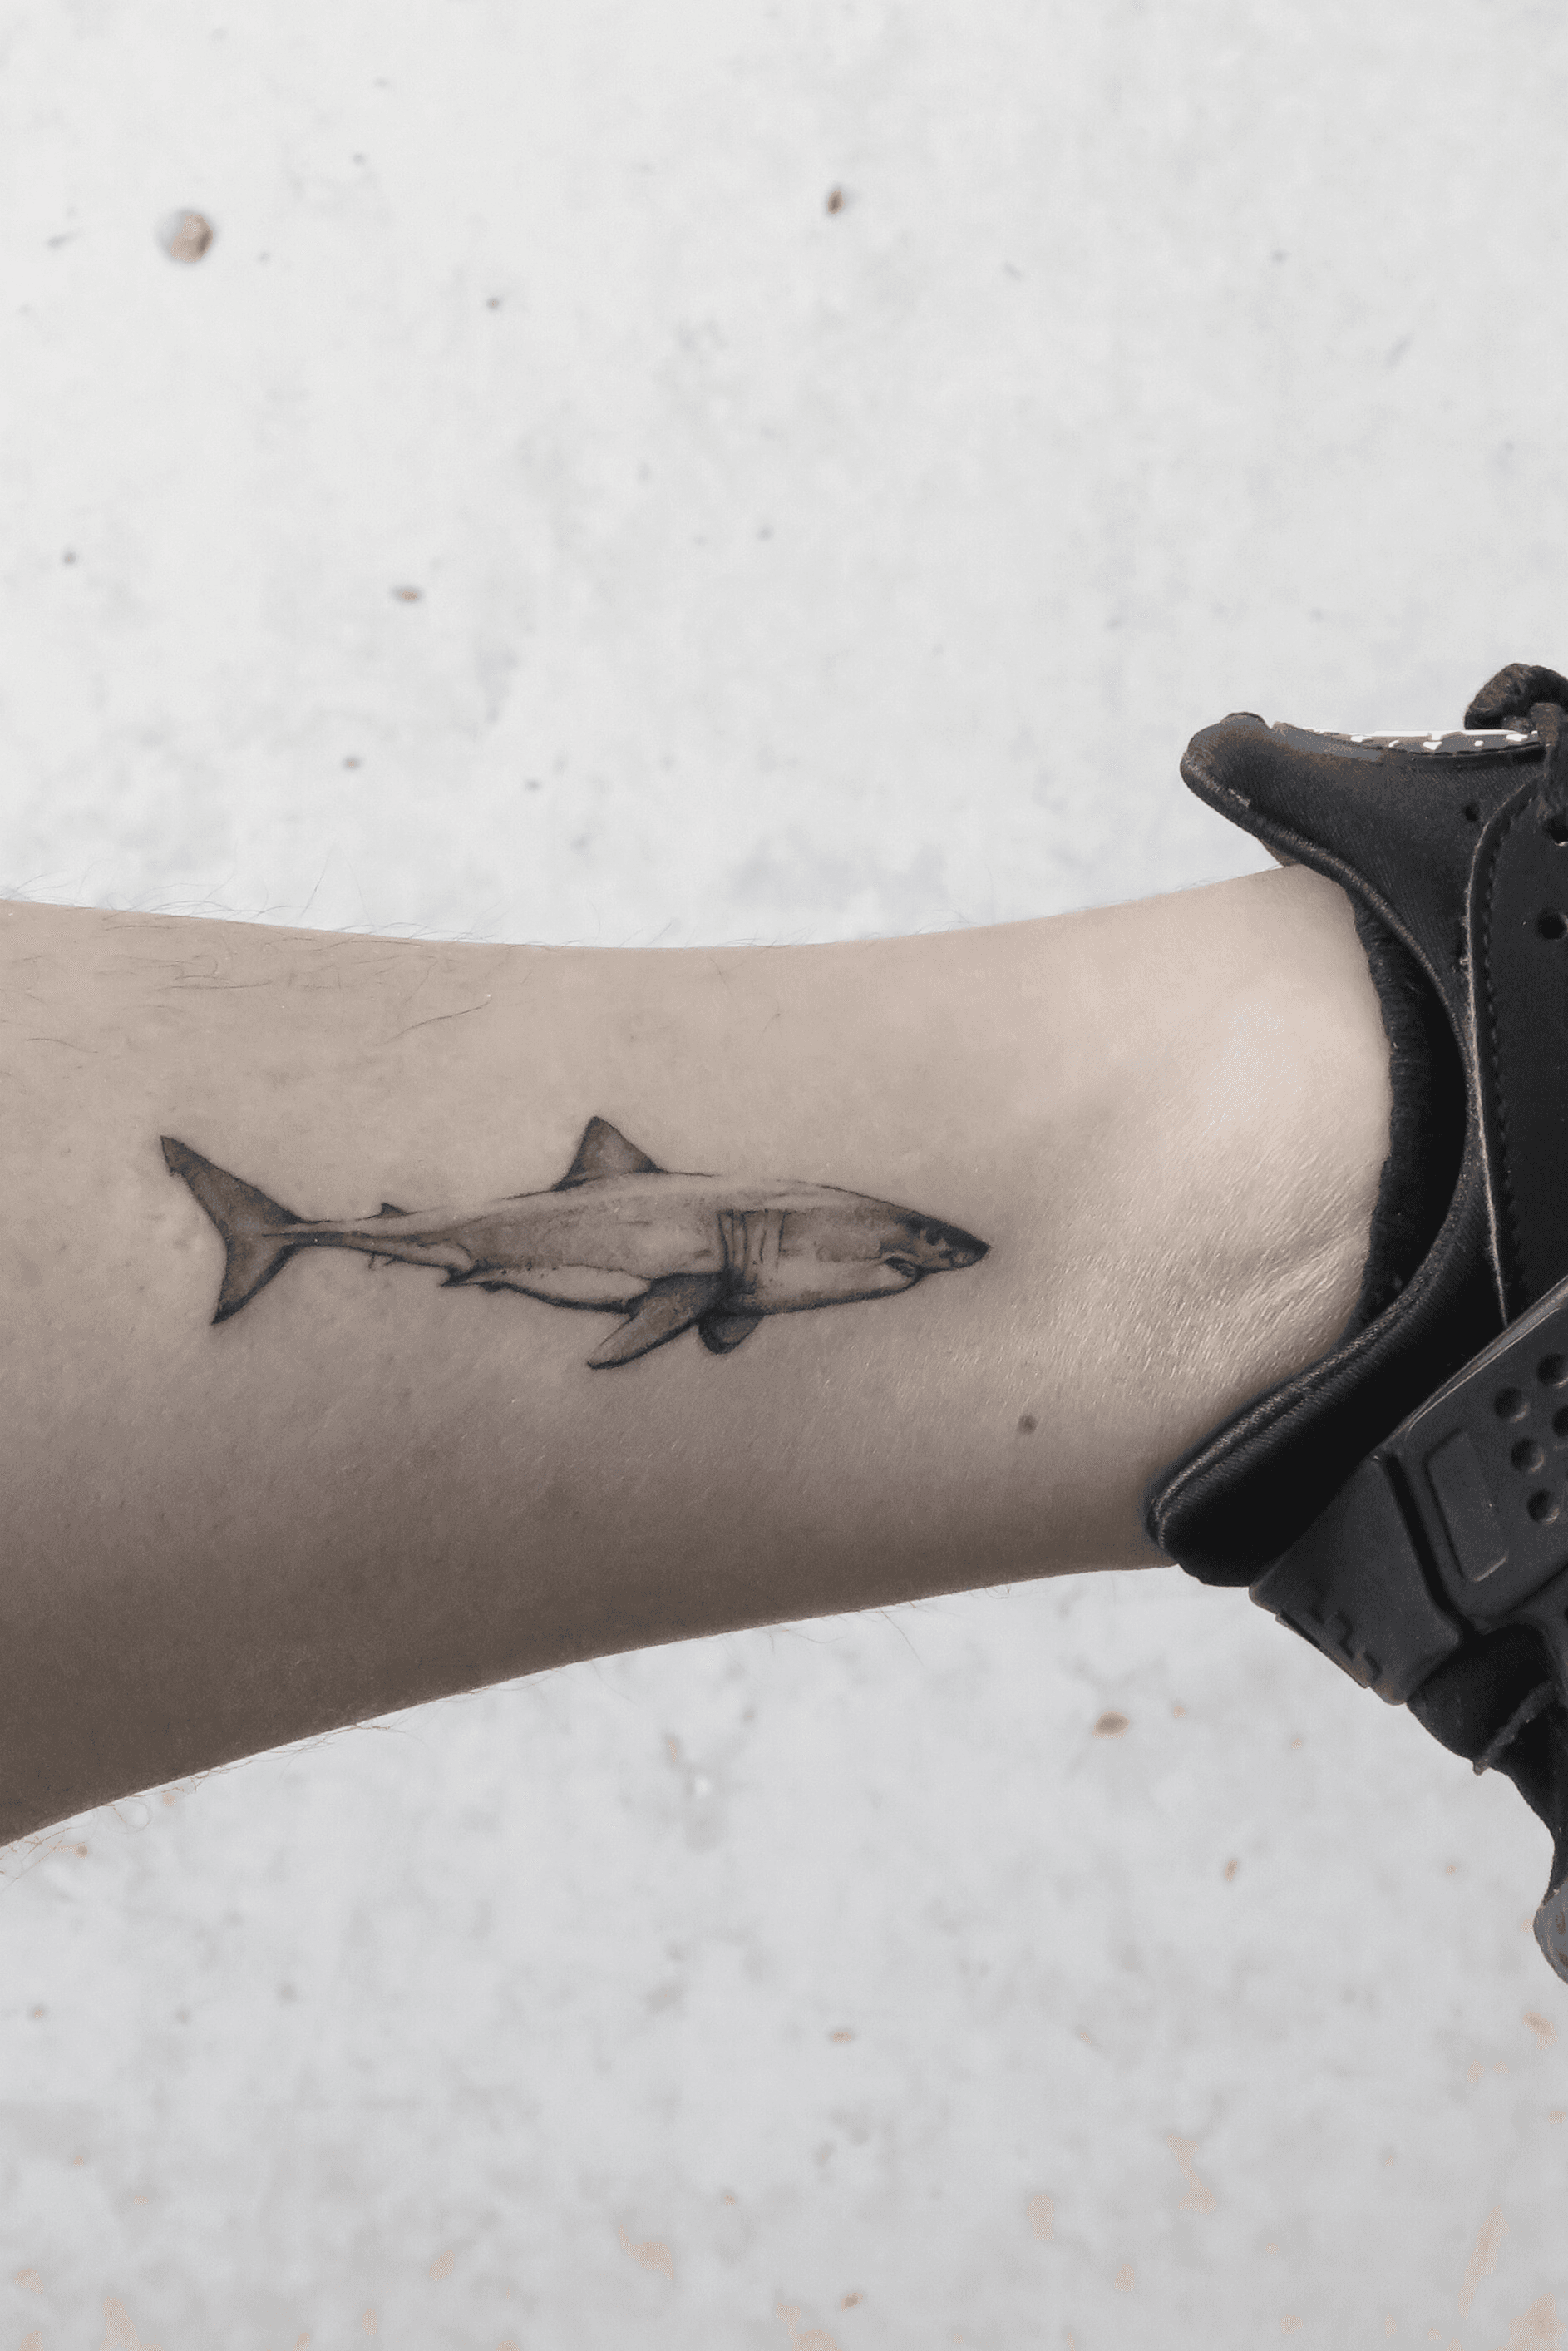 Shark on Outer Forearm Tattoo Idea